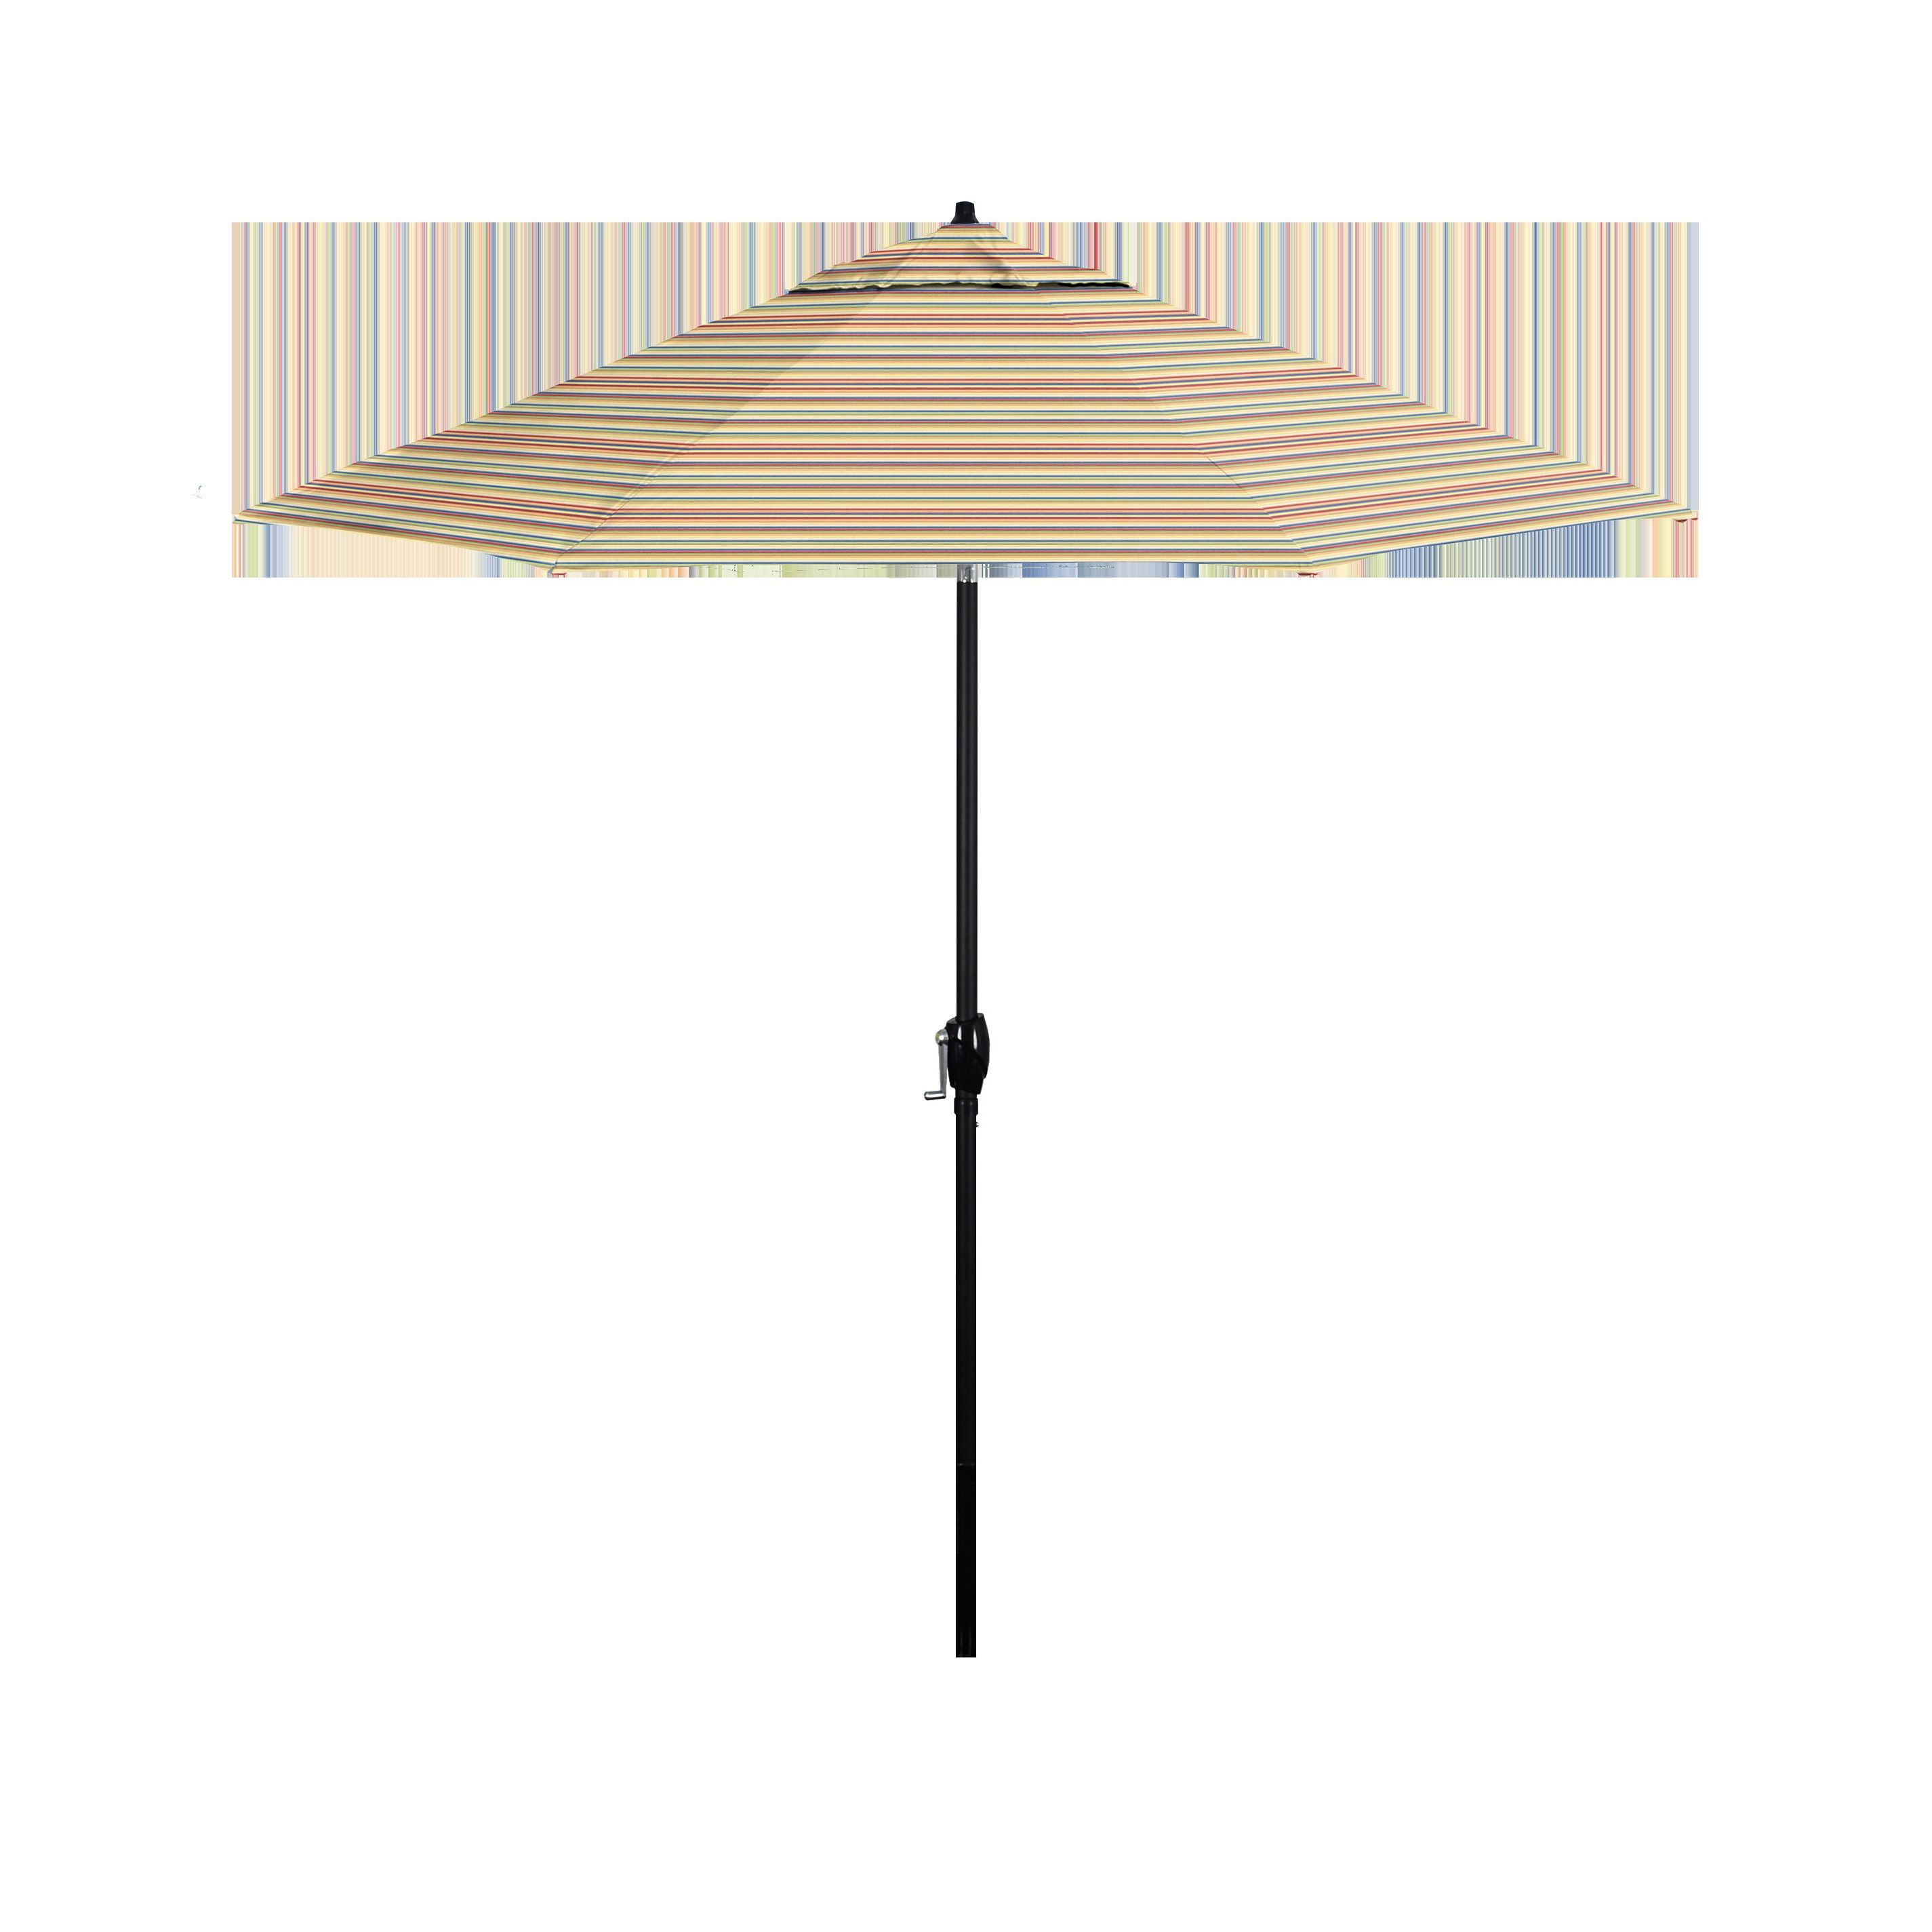 Crowborough Market Umbrellas Intended For Well Known 9' Market Sunbrella Umbrella (View 14 of 20)